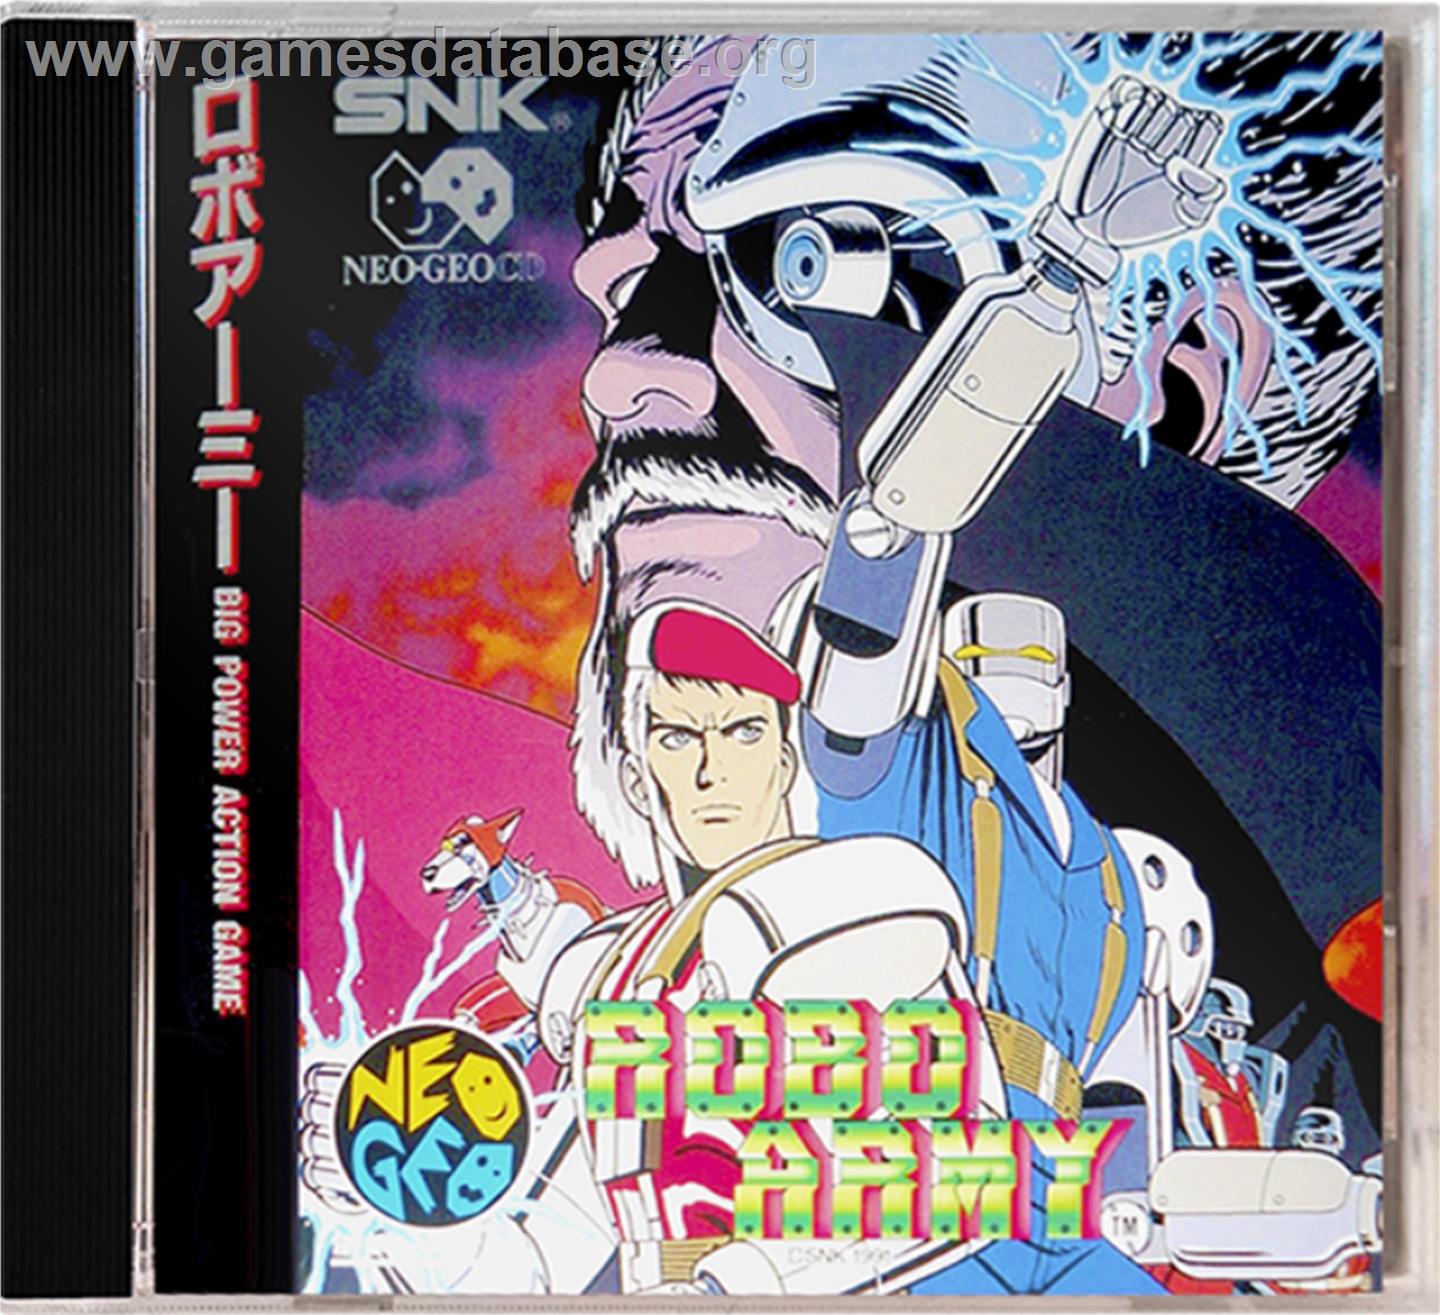 Robo Army - SNK Neo-Geo CD - Artwork - Box